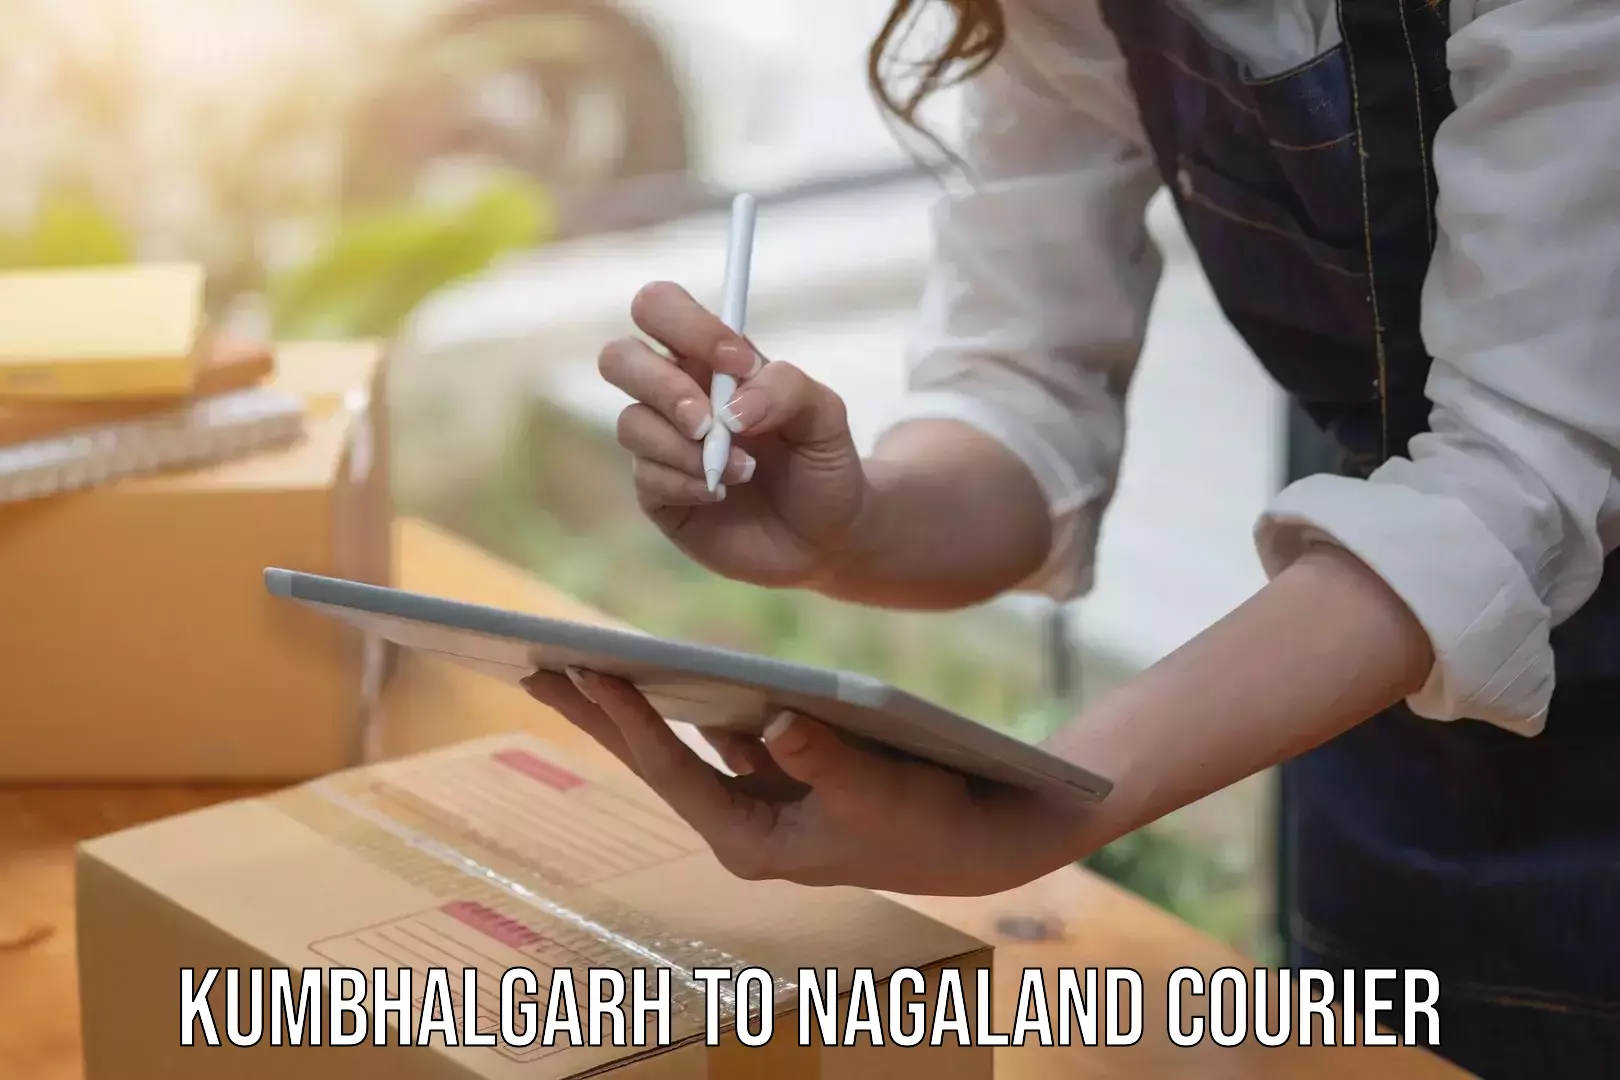 Courier service comparison Kumbhalgarh to Nagaland